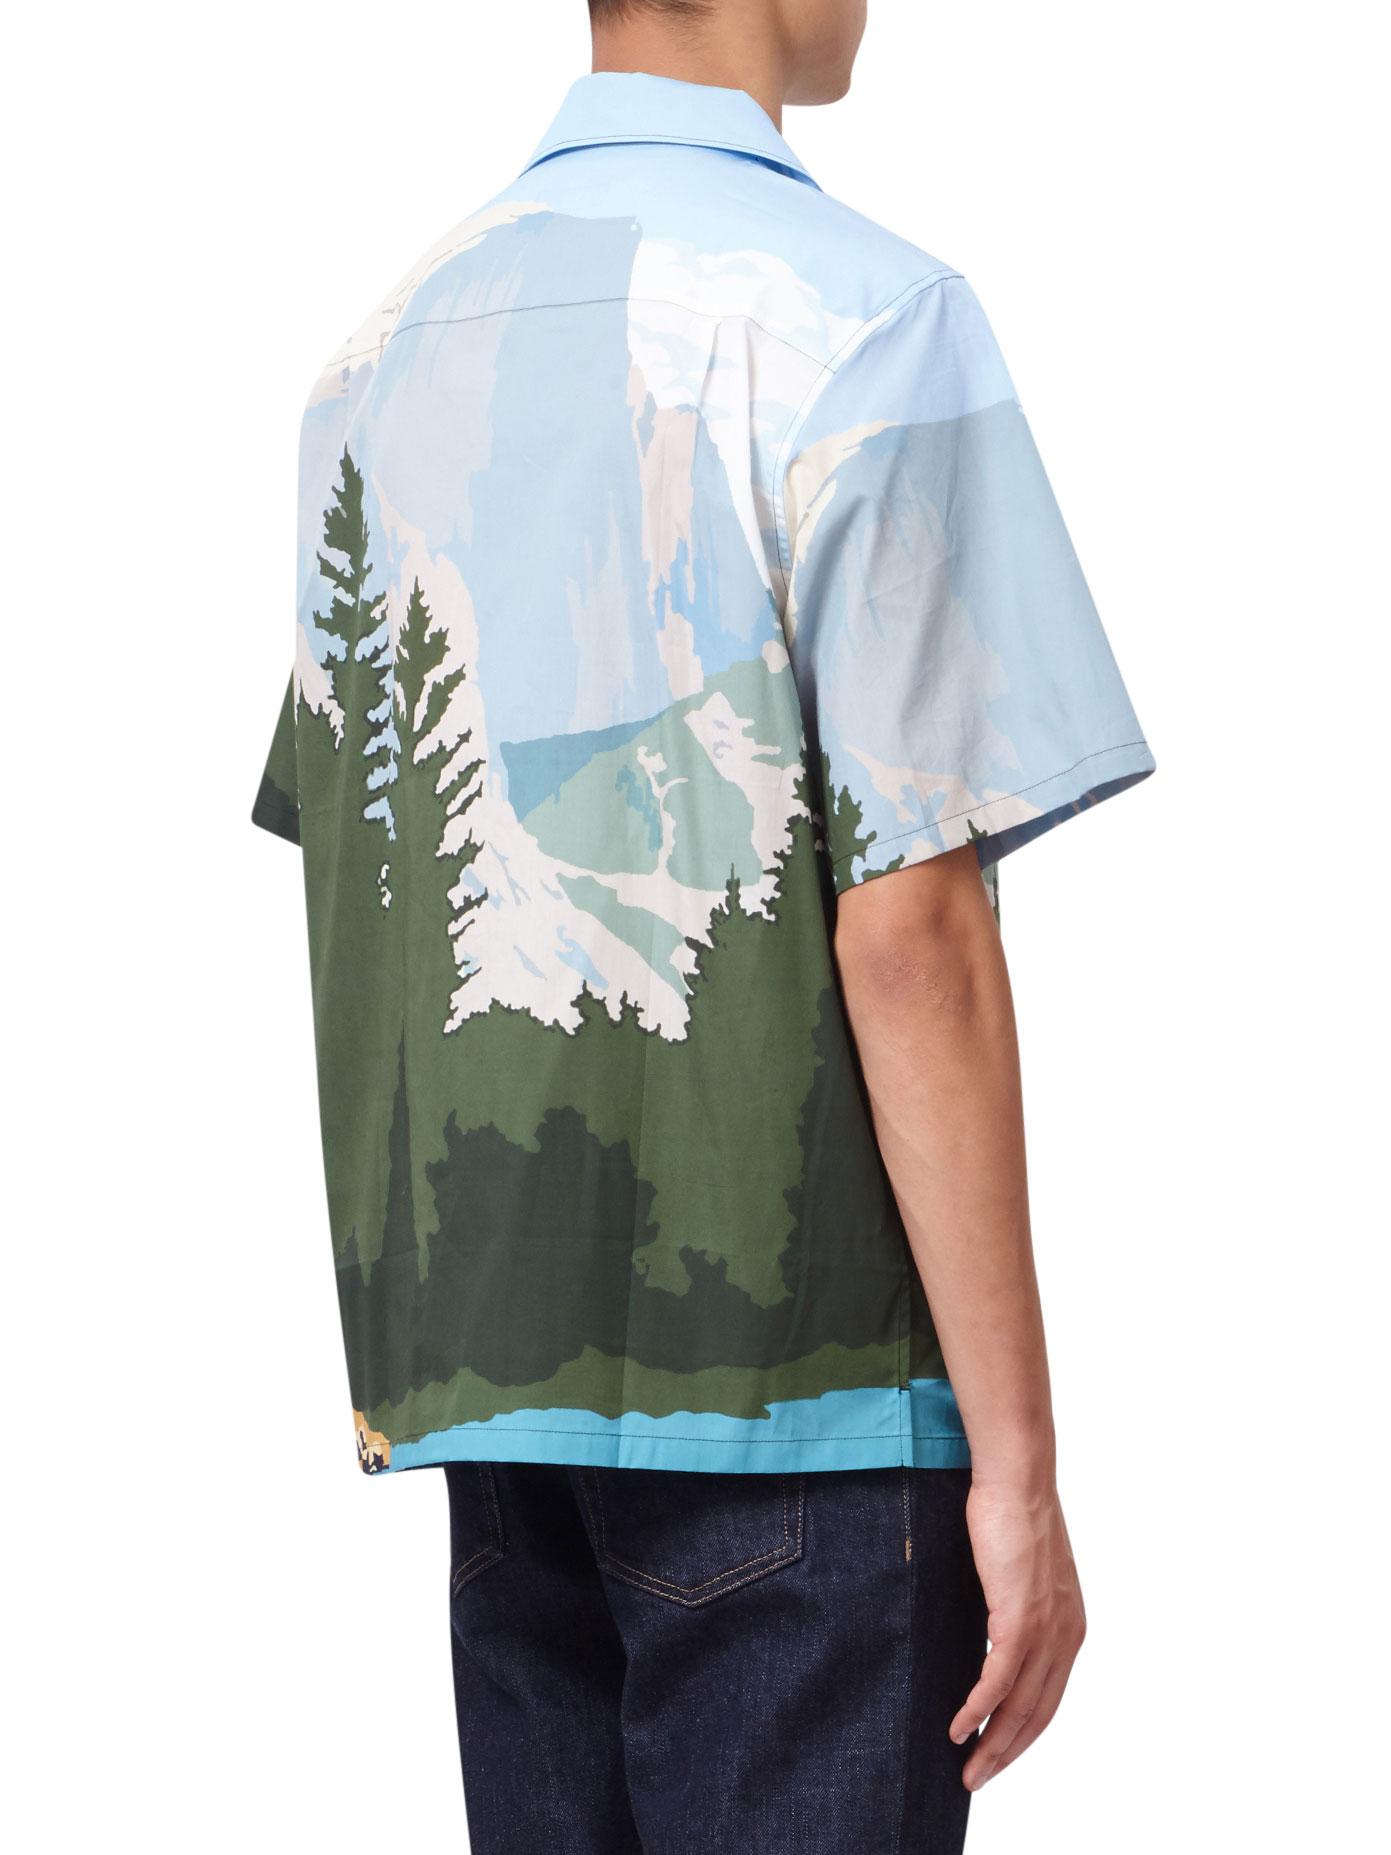 prada mountain shirt